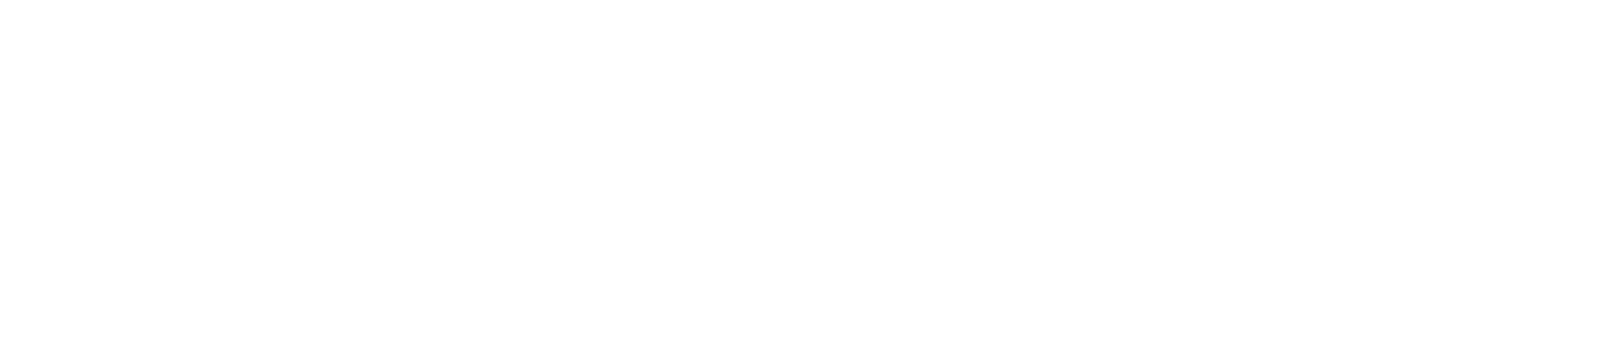 Erietta Luxury Apartments